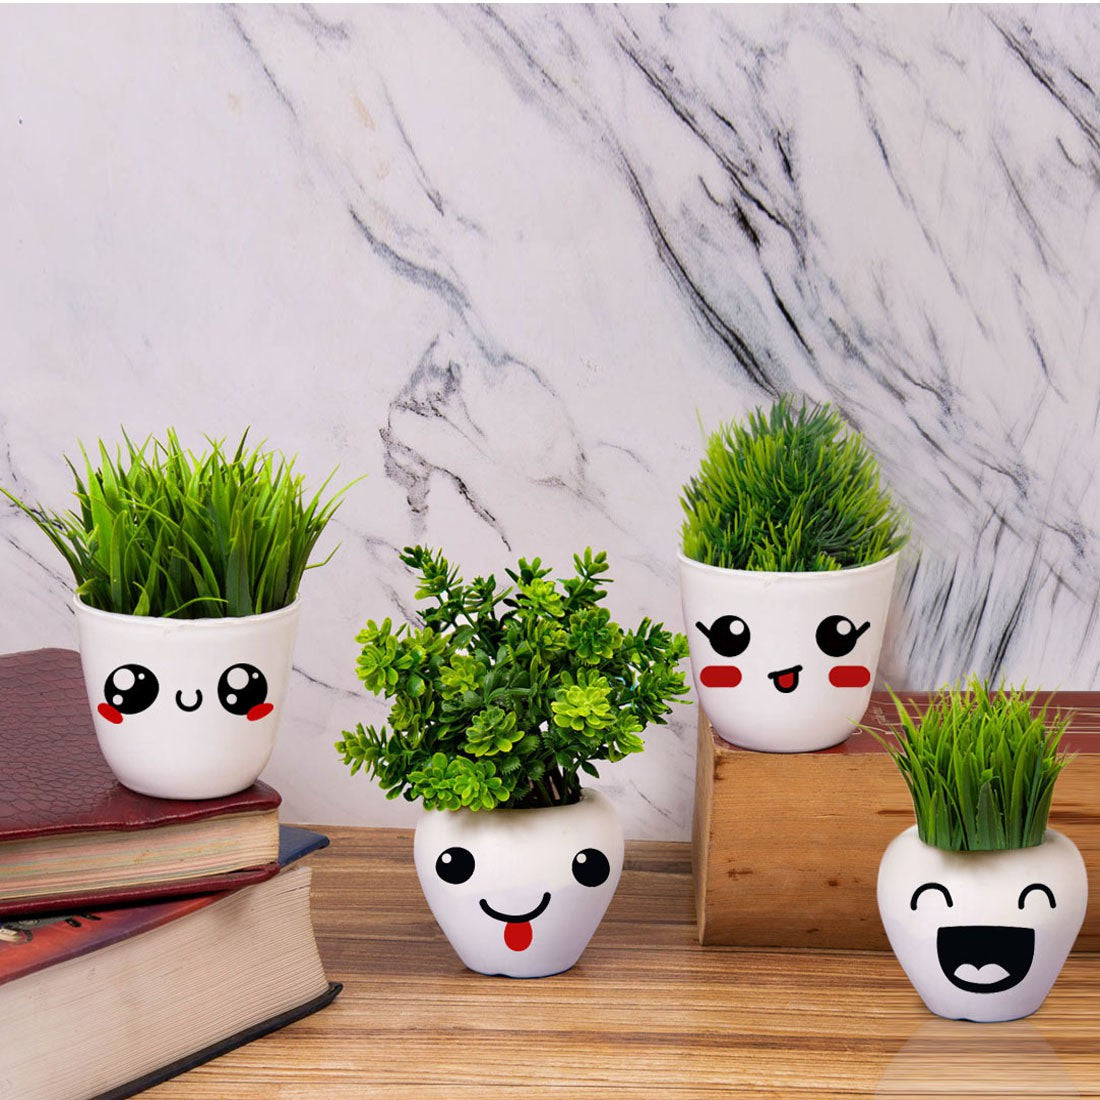 Rakakart- Artificial Plants with Cute Face,set of 4 emoji pots.